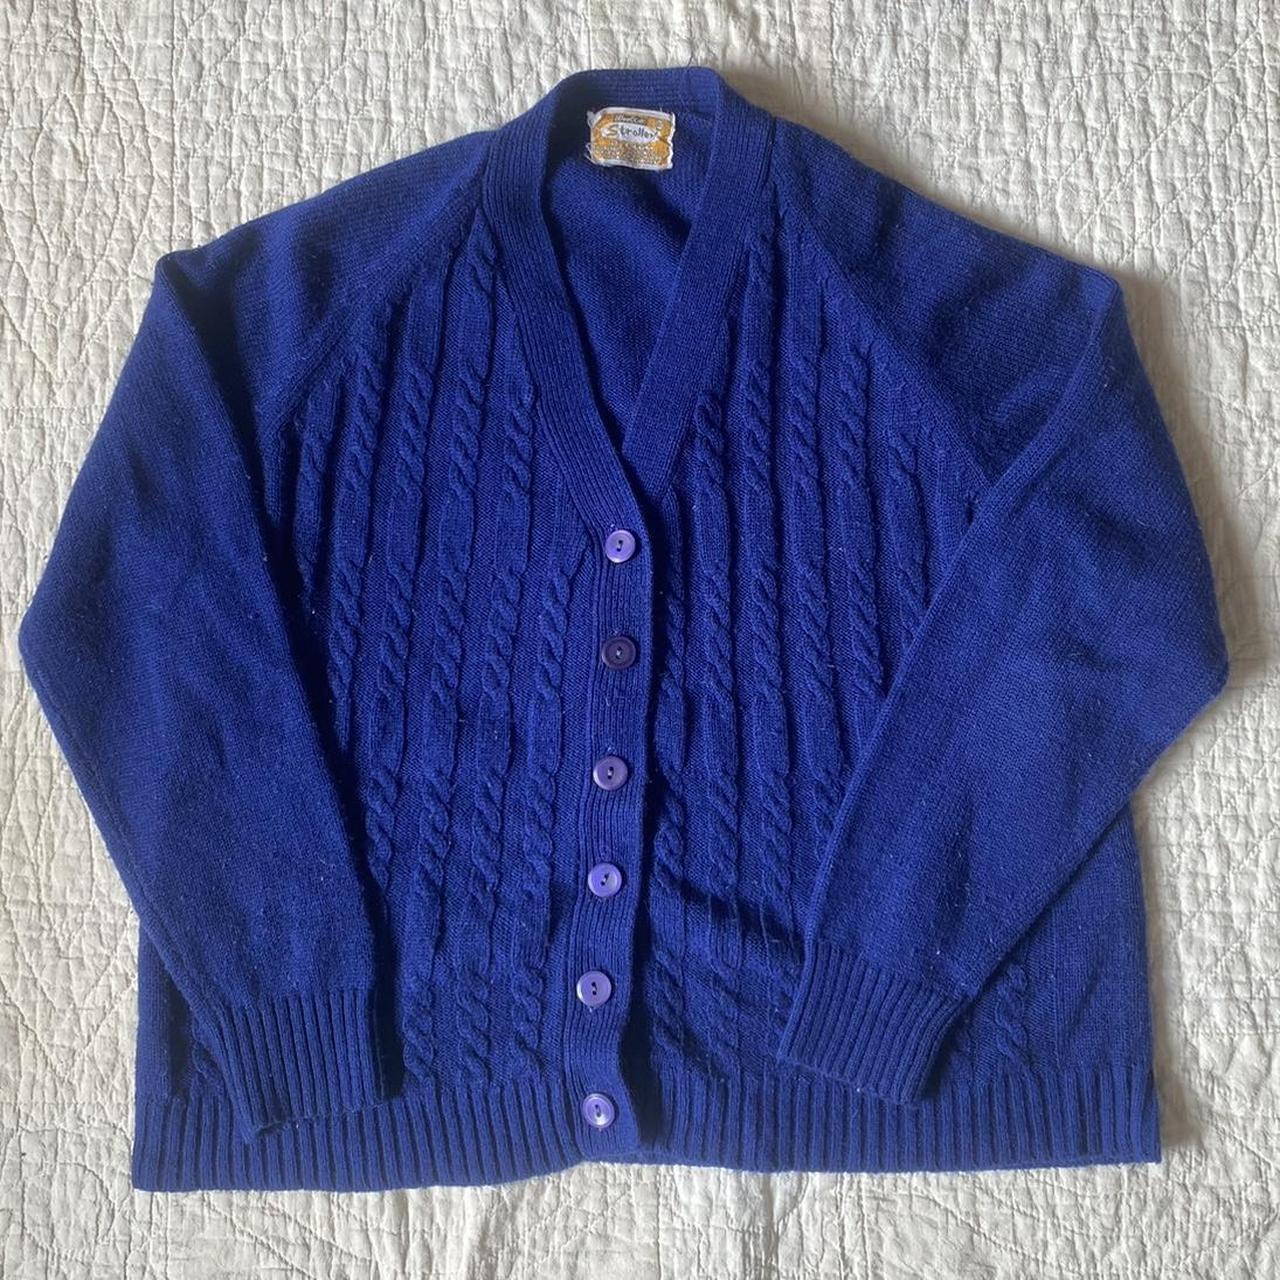 Vintage 60s/70s blue cable knit cardigan sweater... - Depop